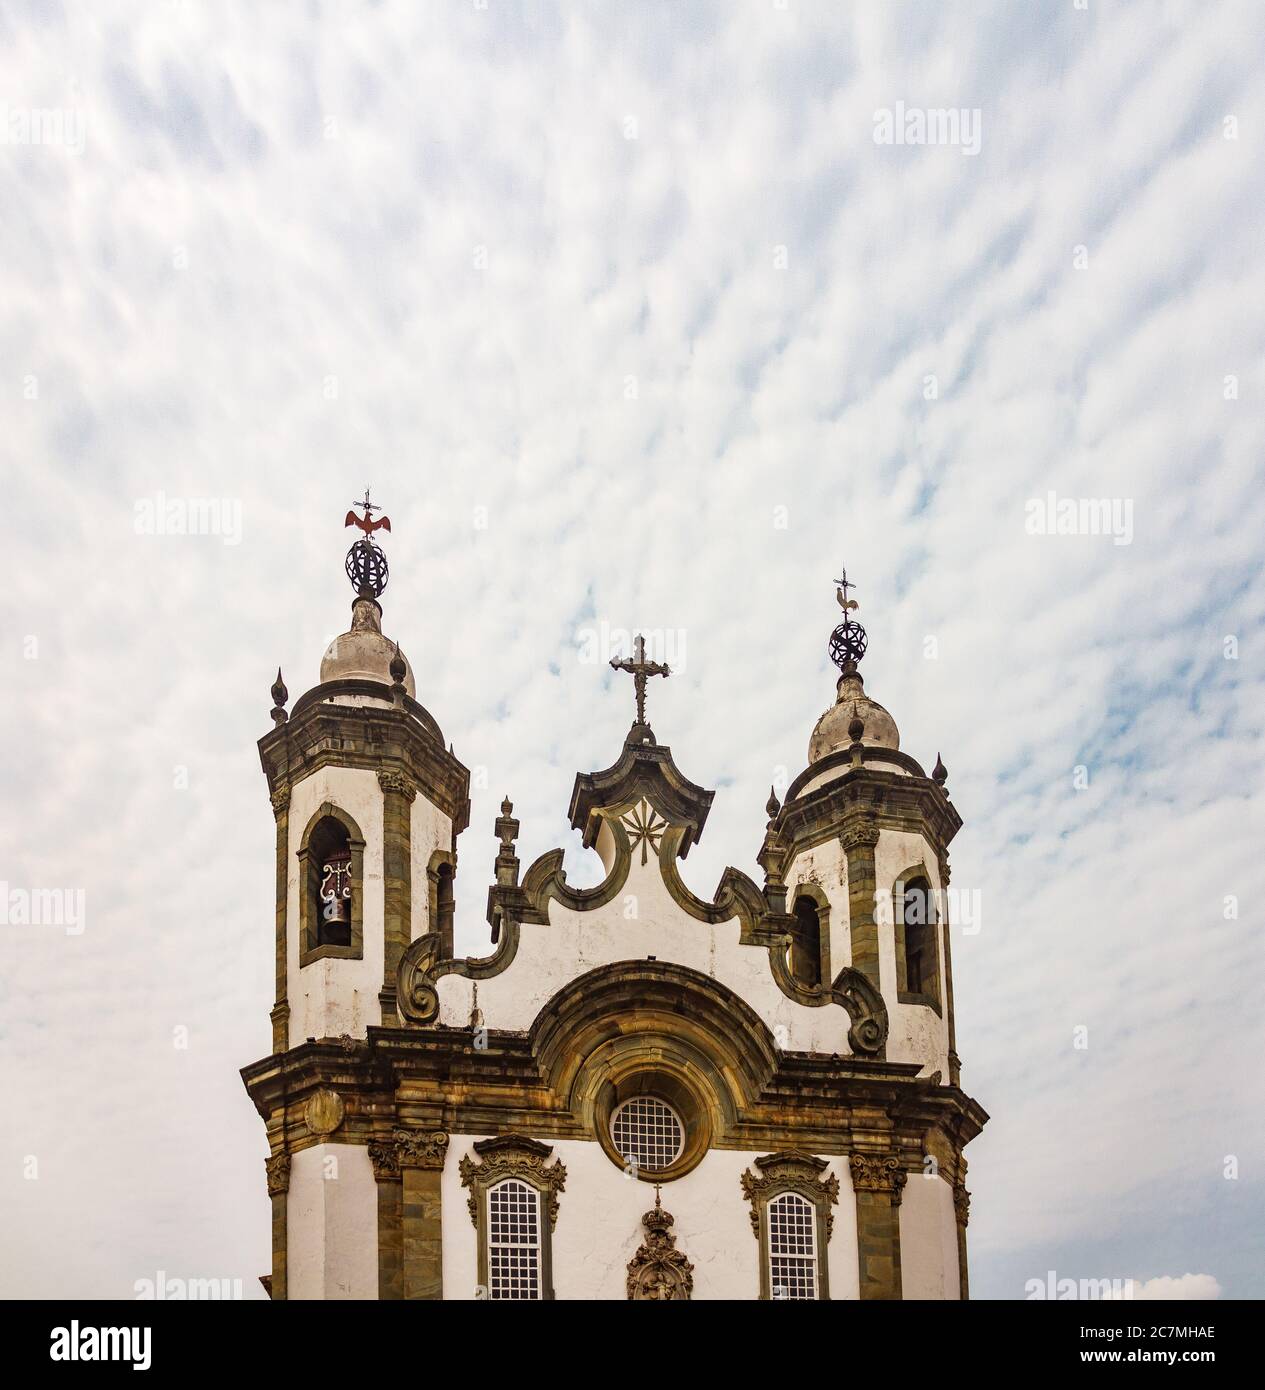 Church of Our Lady of Mount Carmel in São João del-Rei, Minas Gerais, Brazil Stock Photo